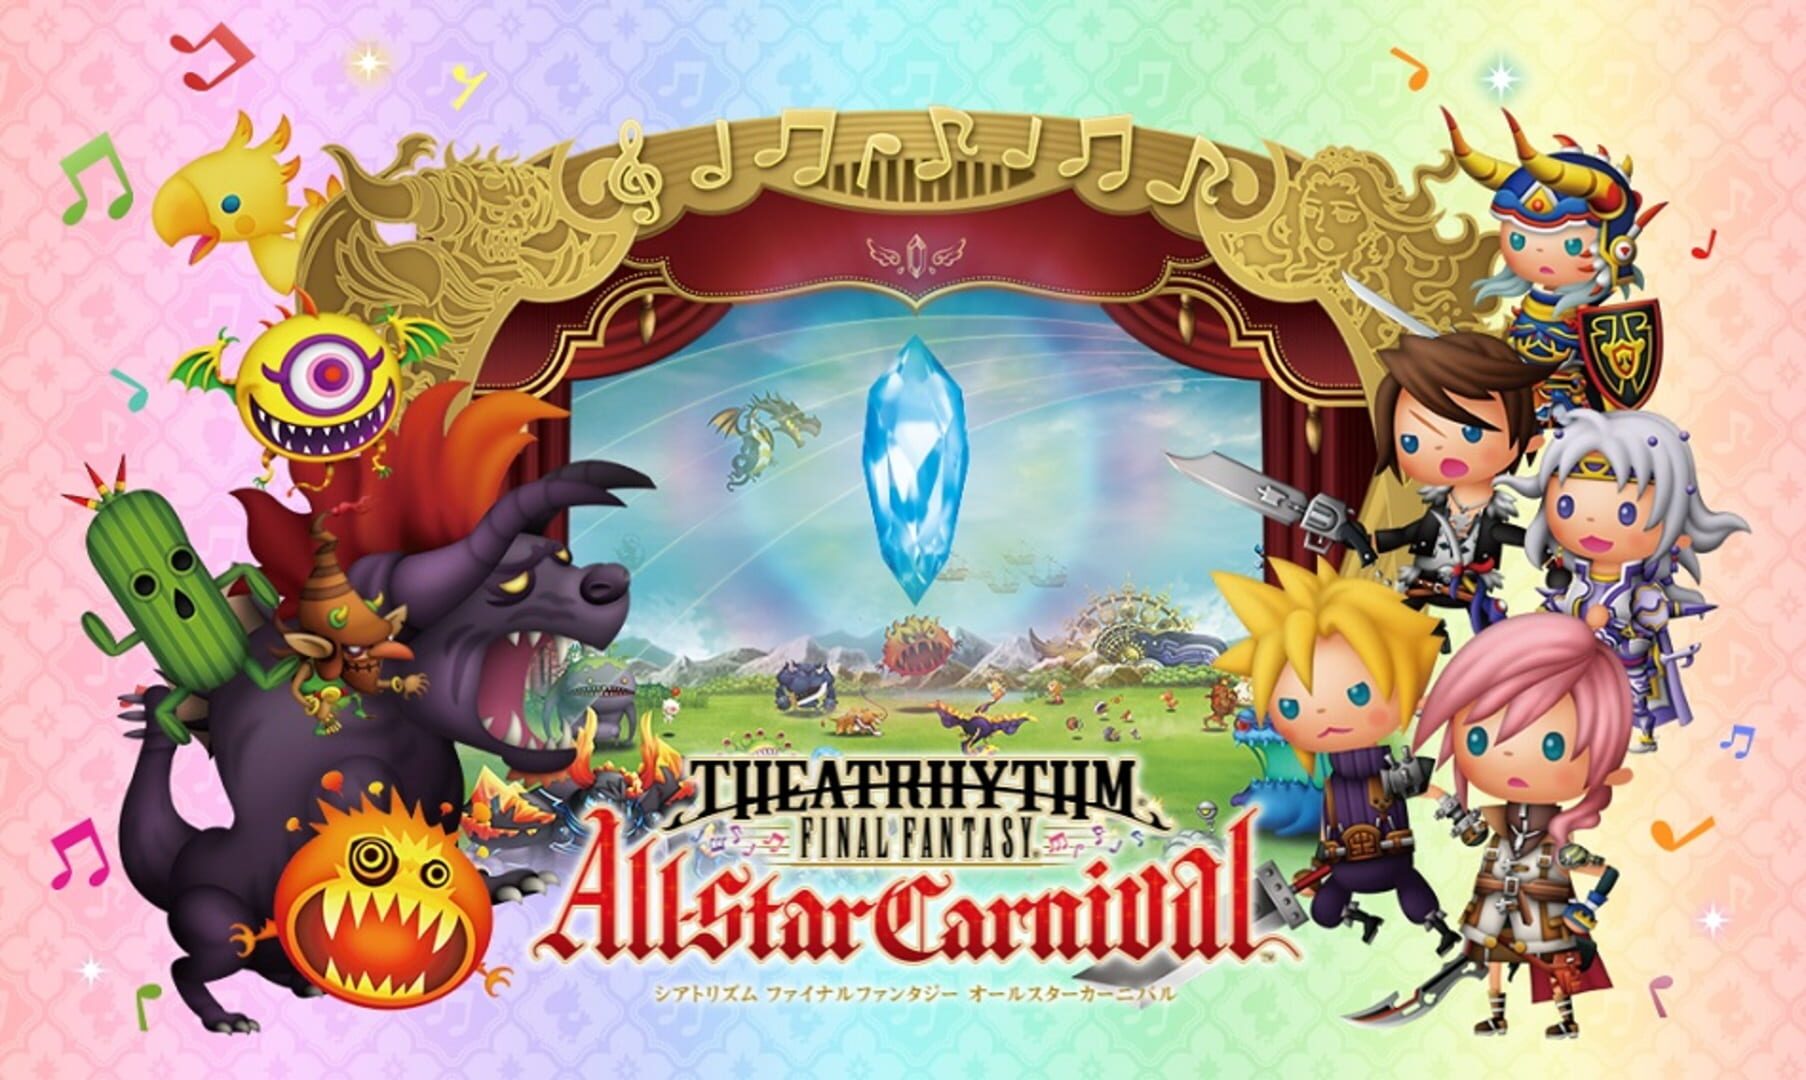 Arte - Theatrhythm Final Fantasy: All-Star Carnival